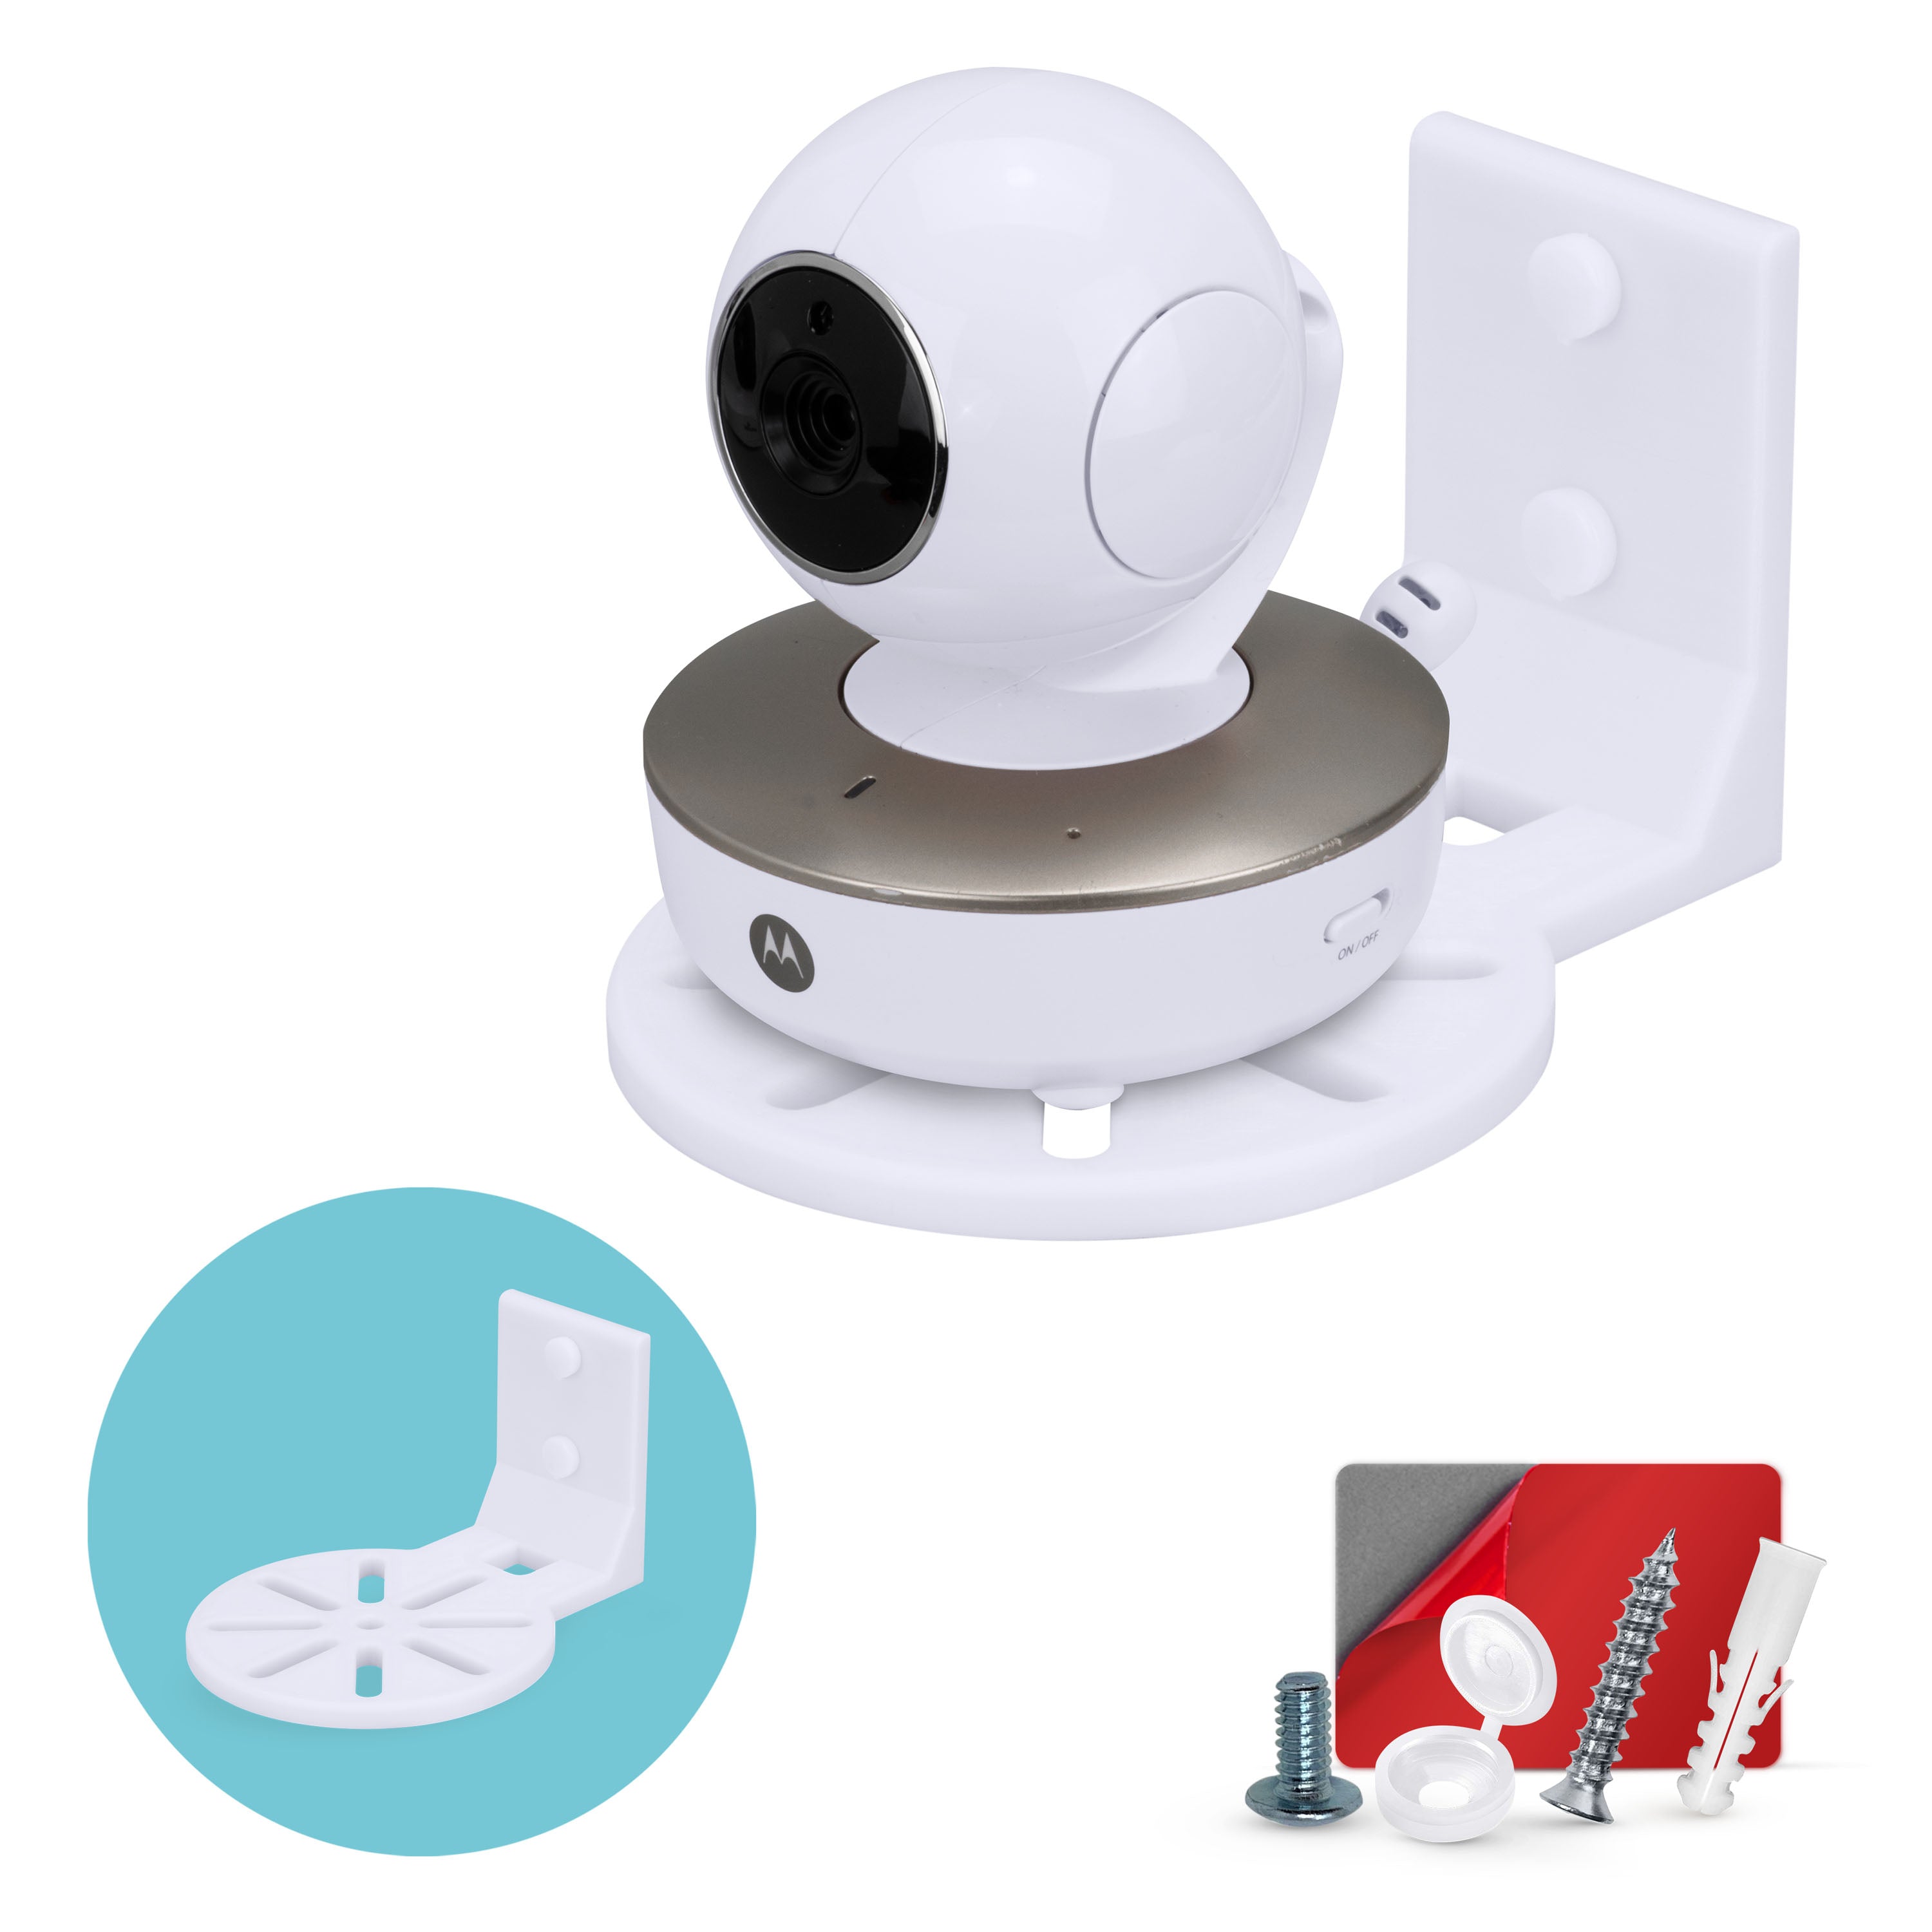 Corner Wall Mount For YI Home (3 Pack) Security Camera - Adhesive Hold -  Brainwavz Audio